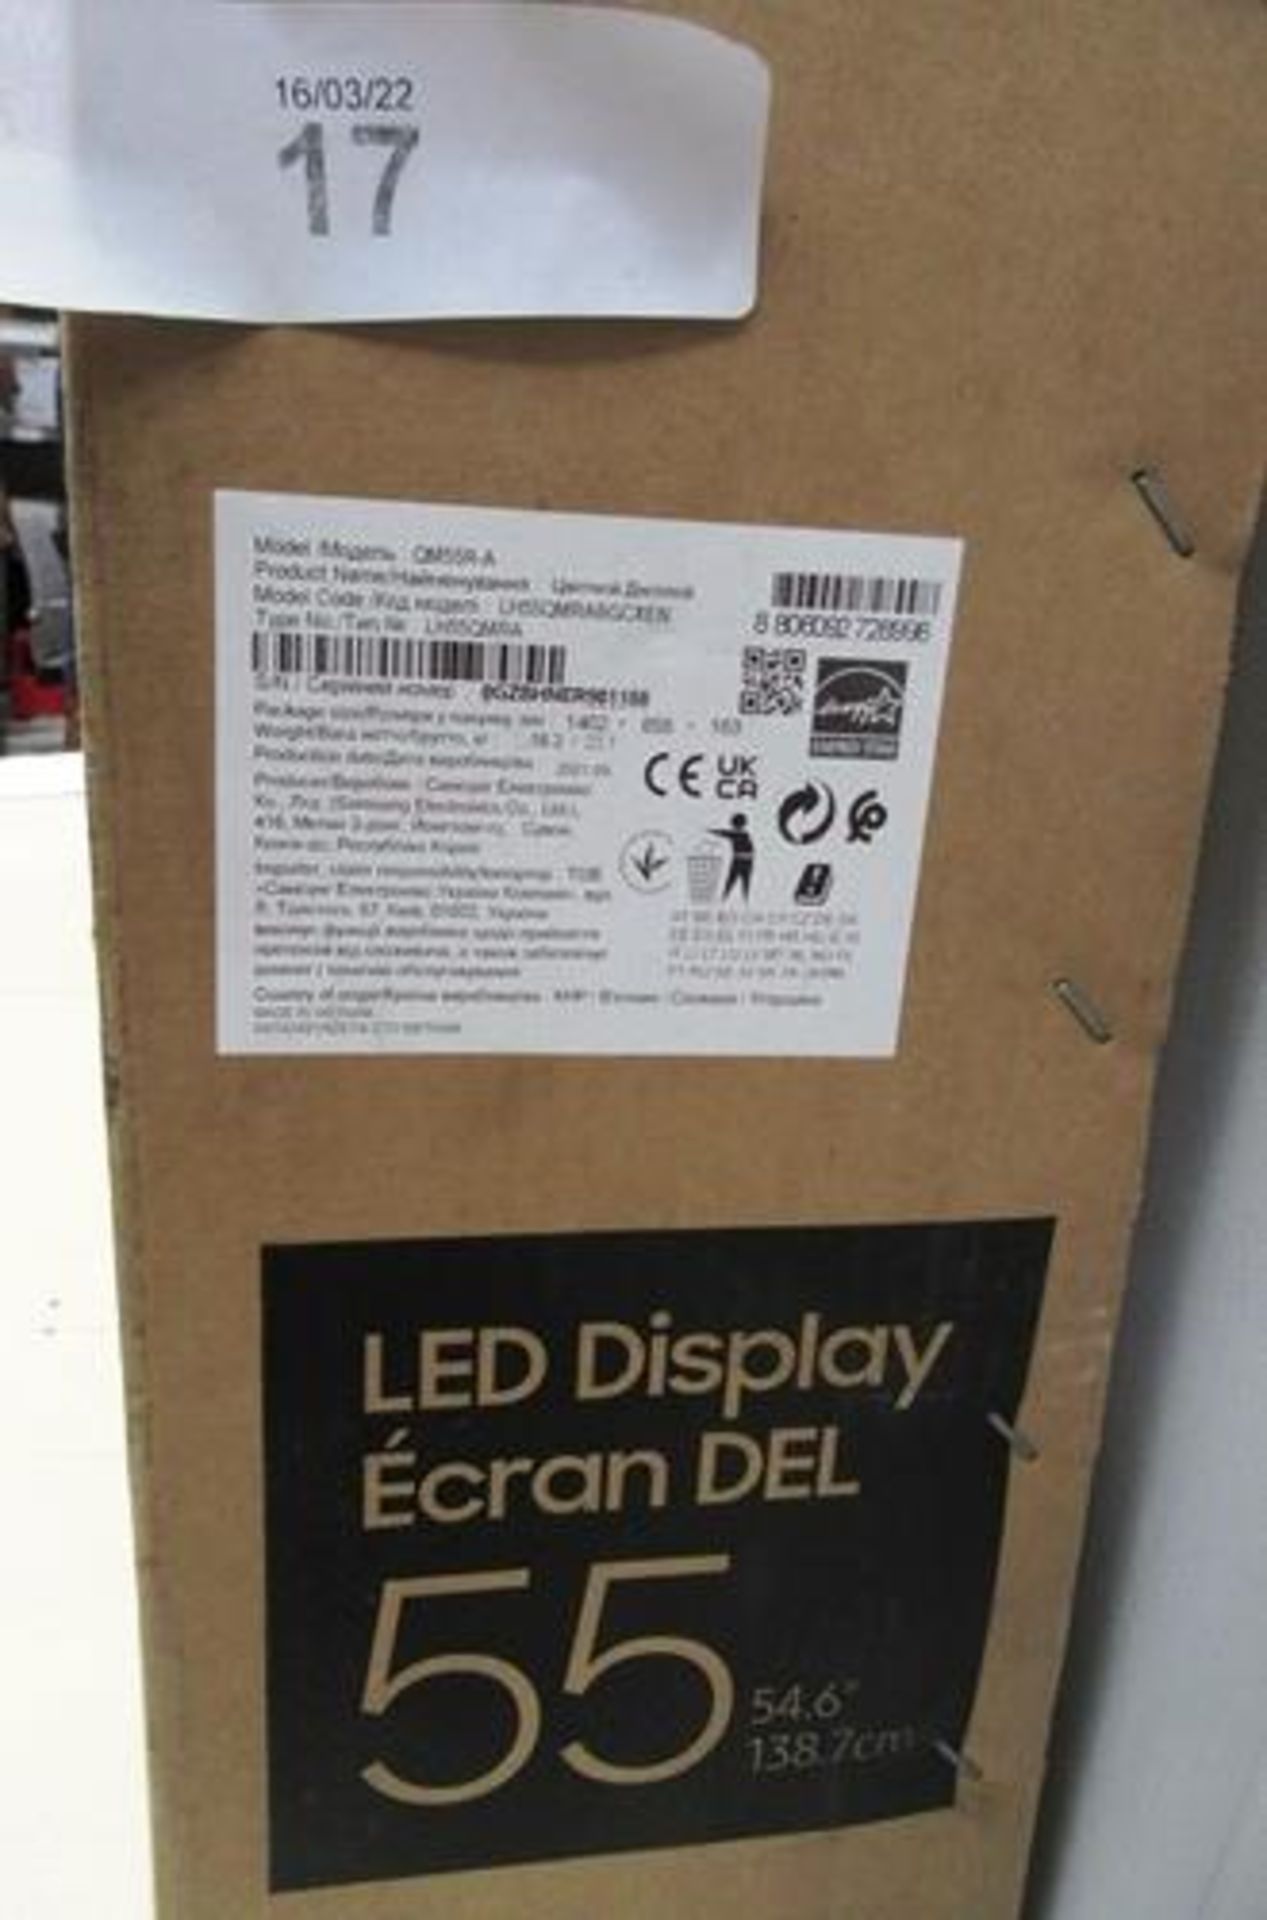 1 x Samsung 55" LED smart signage display - Sealed new in box (ES8) - Image 2 of 2